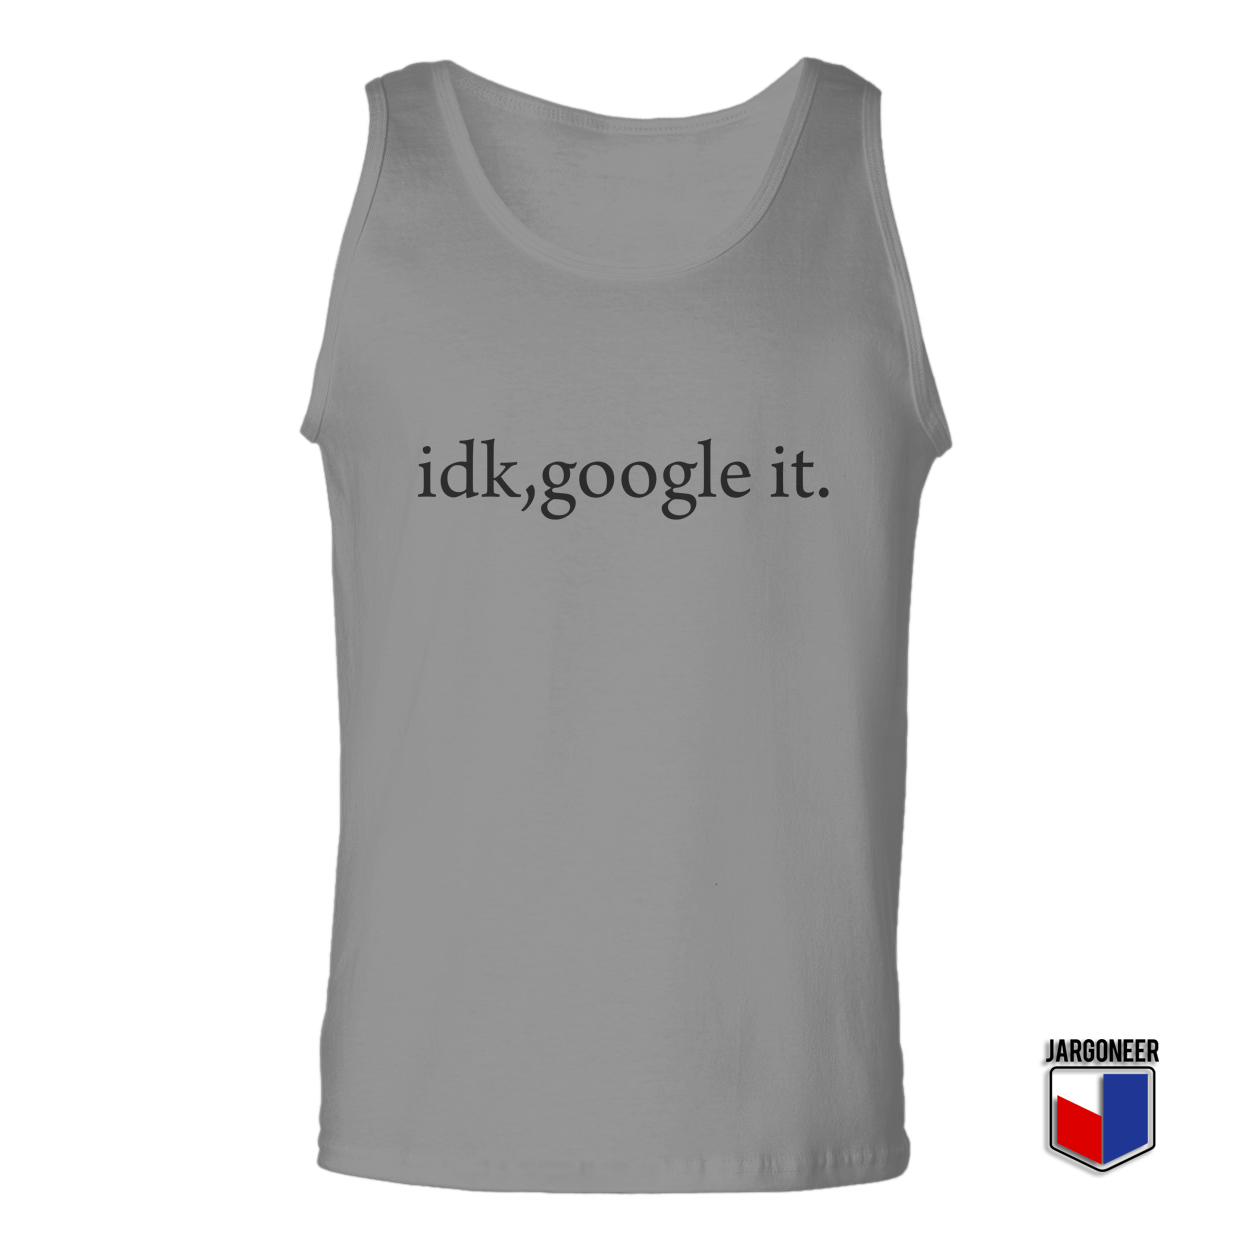 Idk google it grey tanktop - Shop Unique Graphic Cool Shirt Designs